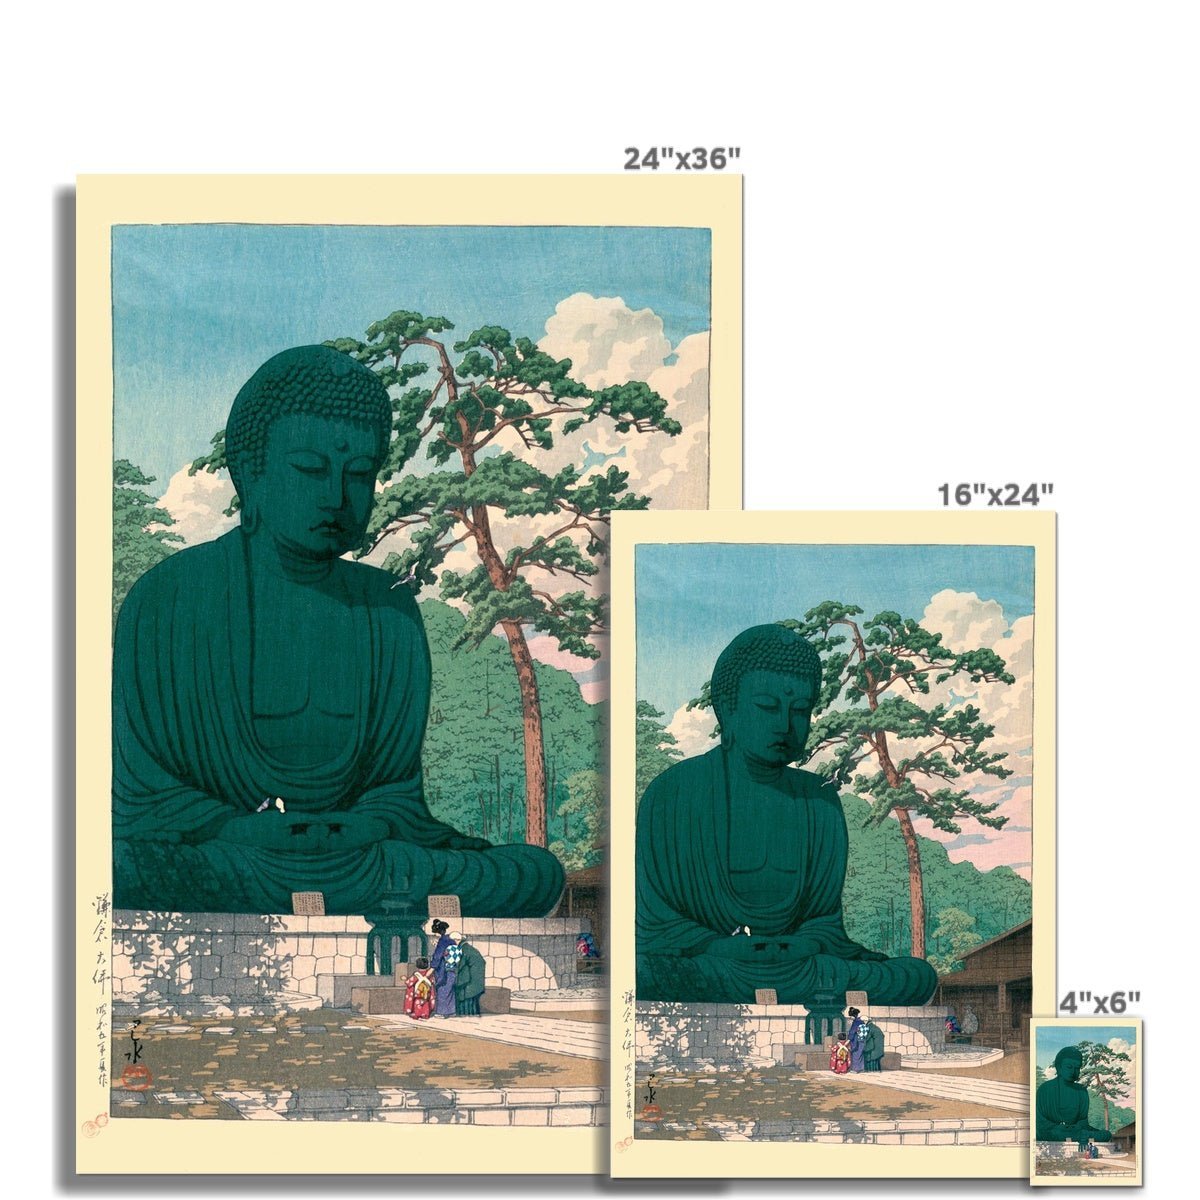 giclee The Great Buddha of Kamakura (Kawase Hasui) Antique Japanese Edo Woodblock Print Ukiyo-e Vintage Gift Fine Art Print